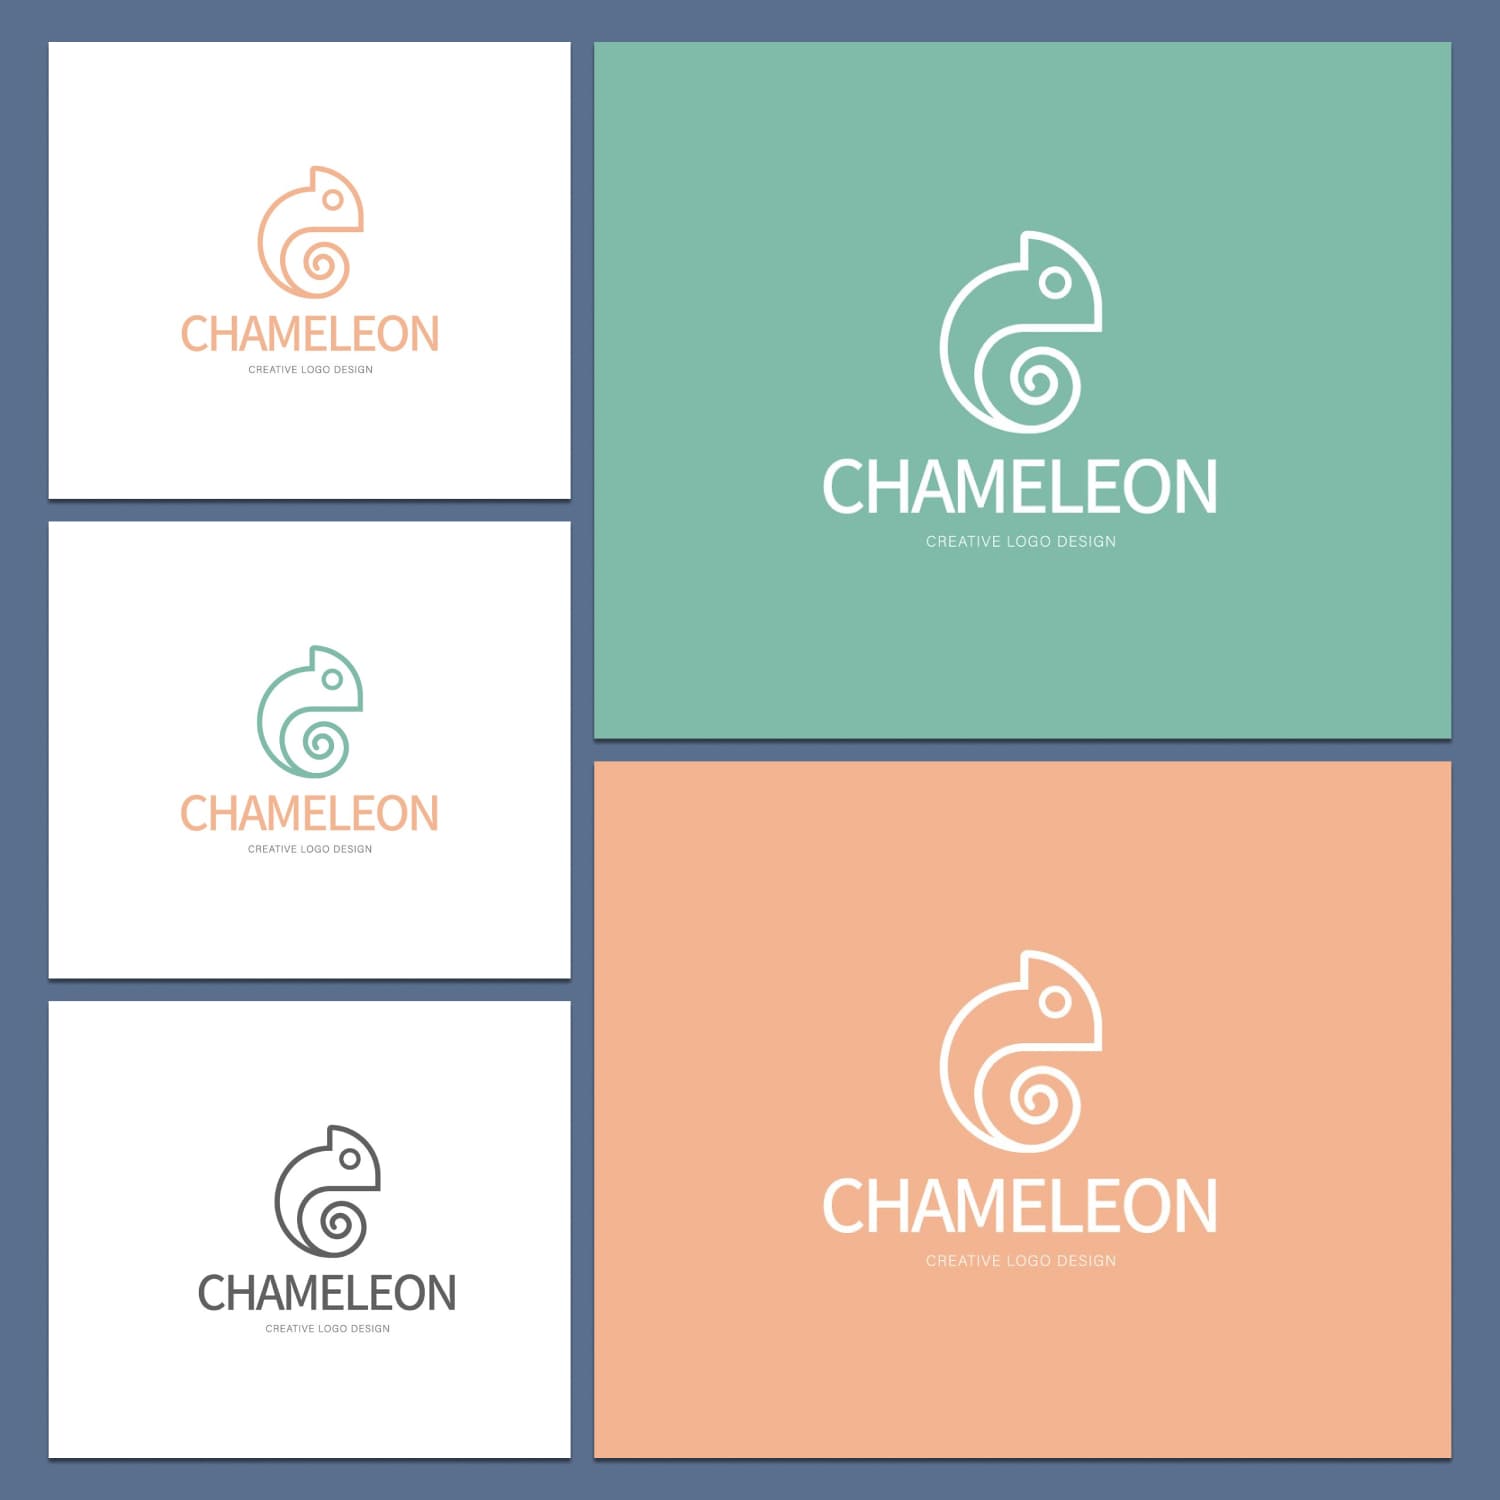 Chameleon logo design created by Logocreative.